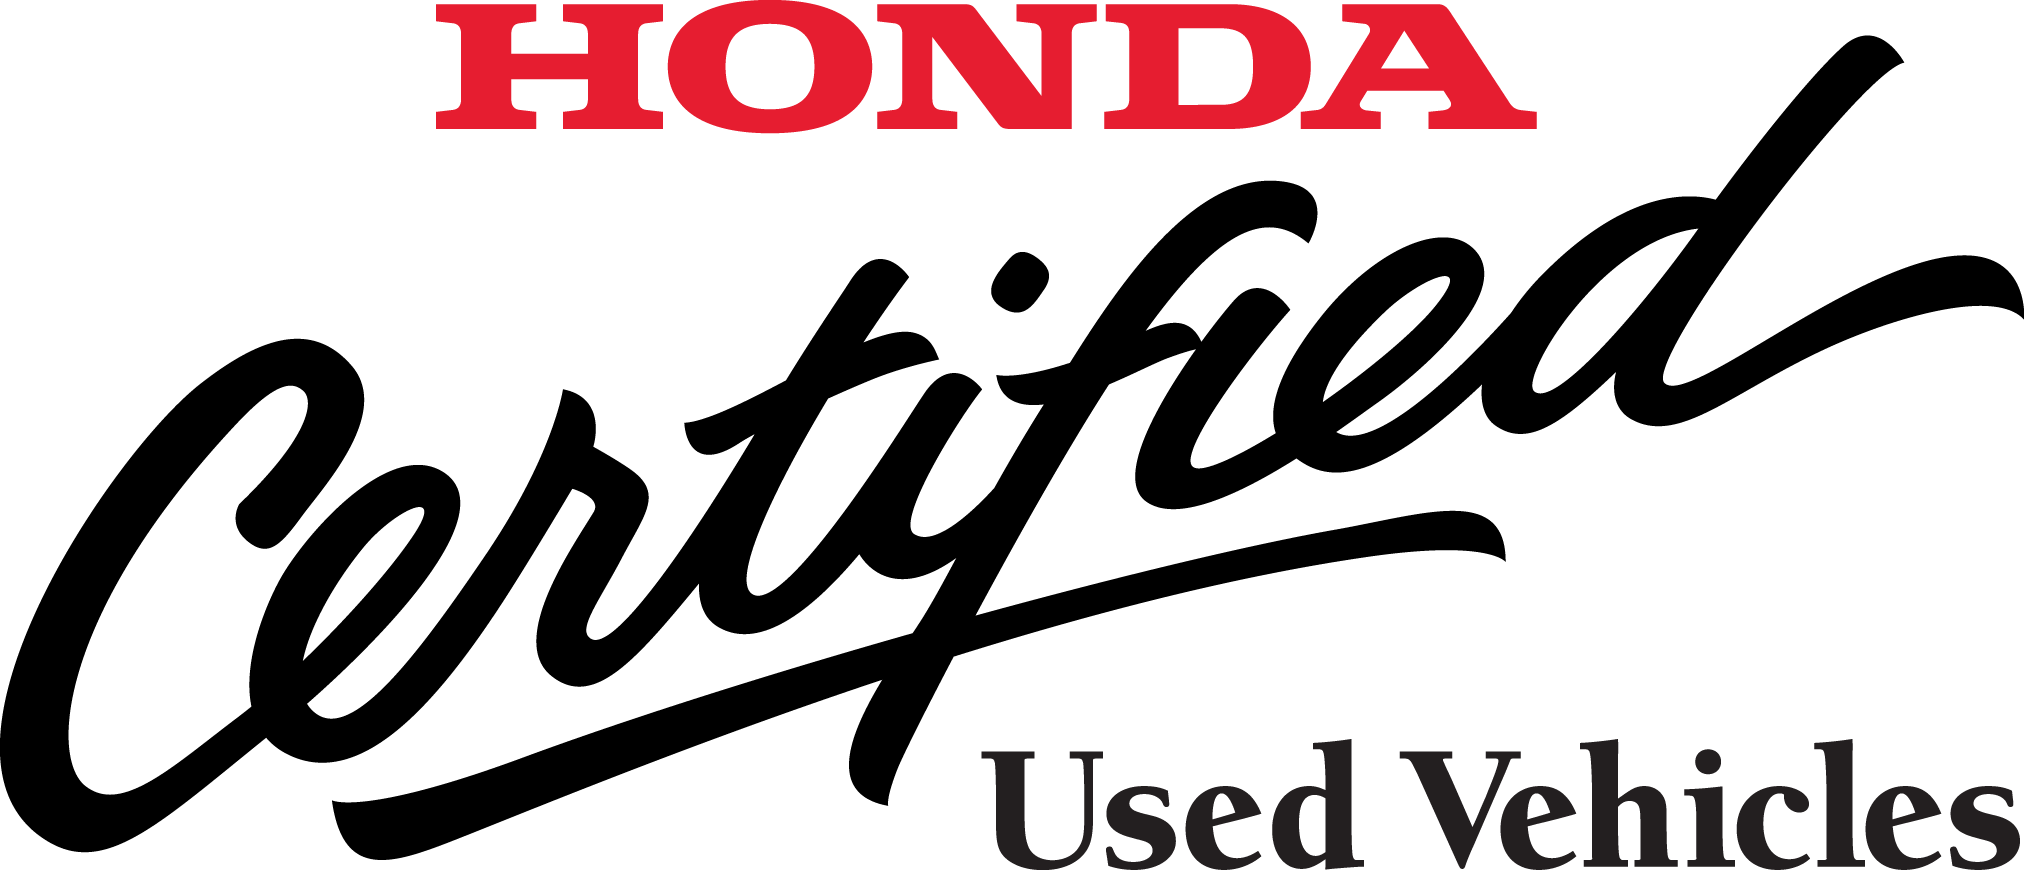 Honda Certified used Vehicles Logo